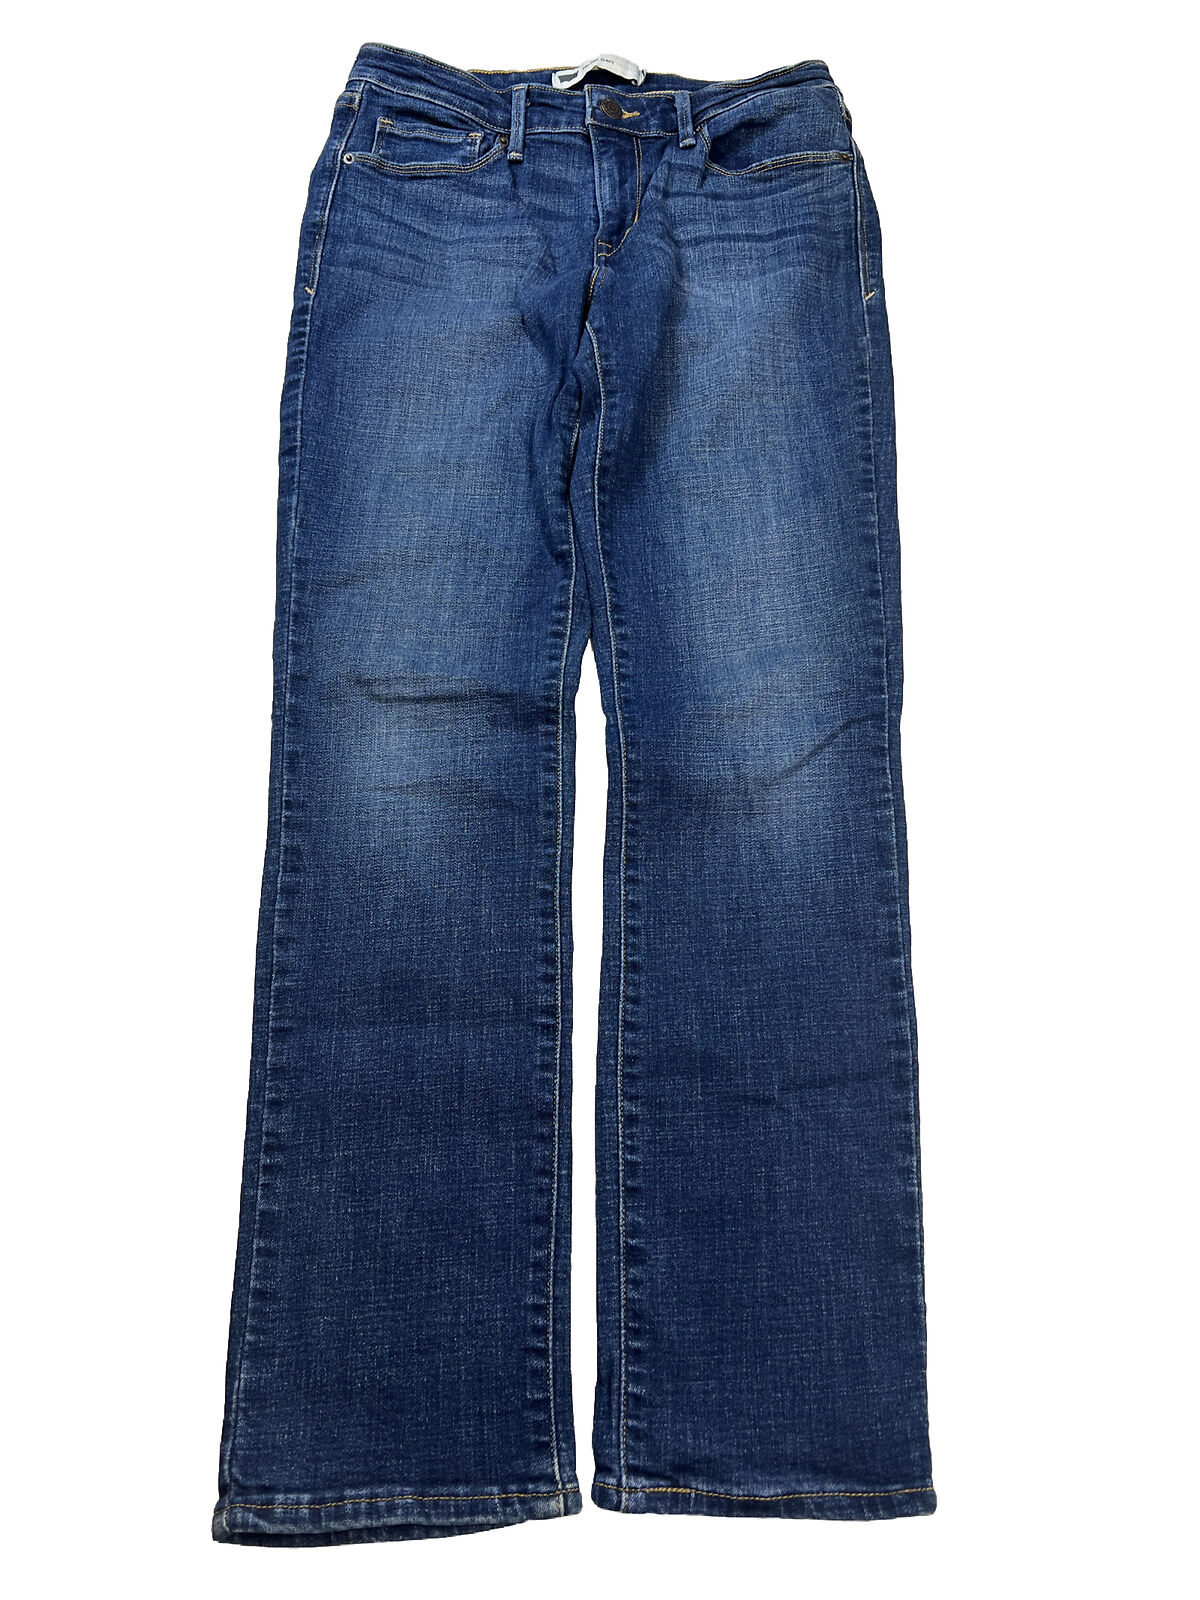 Levi's Women's Dark Wash Mid Rise Skinny Stretch Jeans - 6